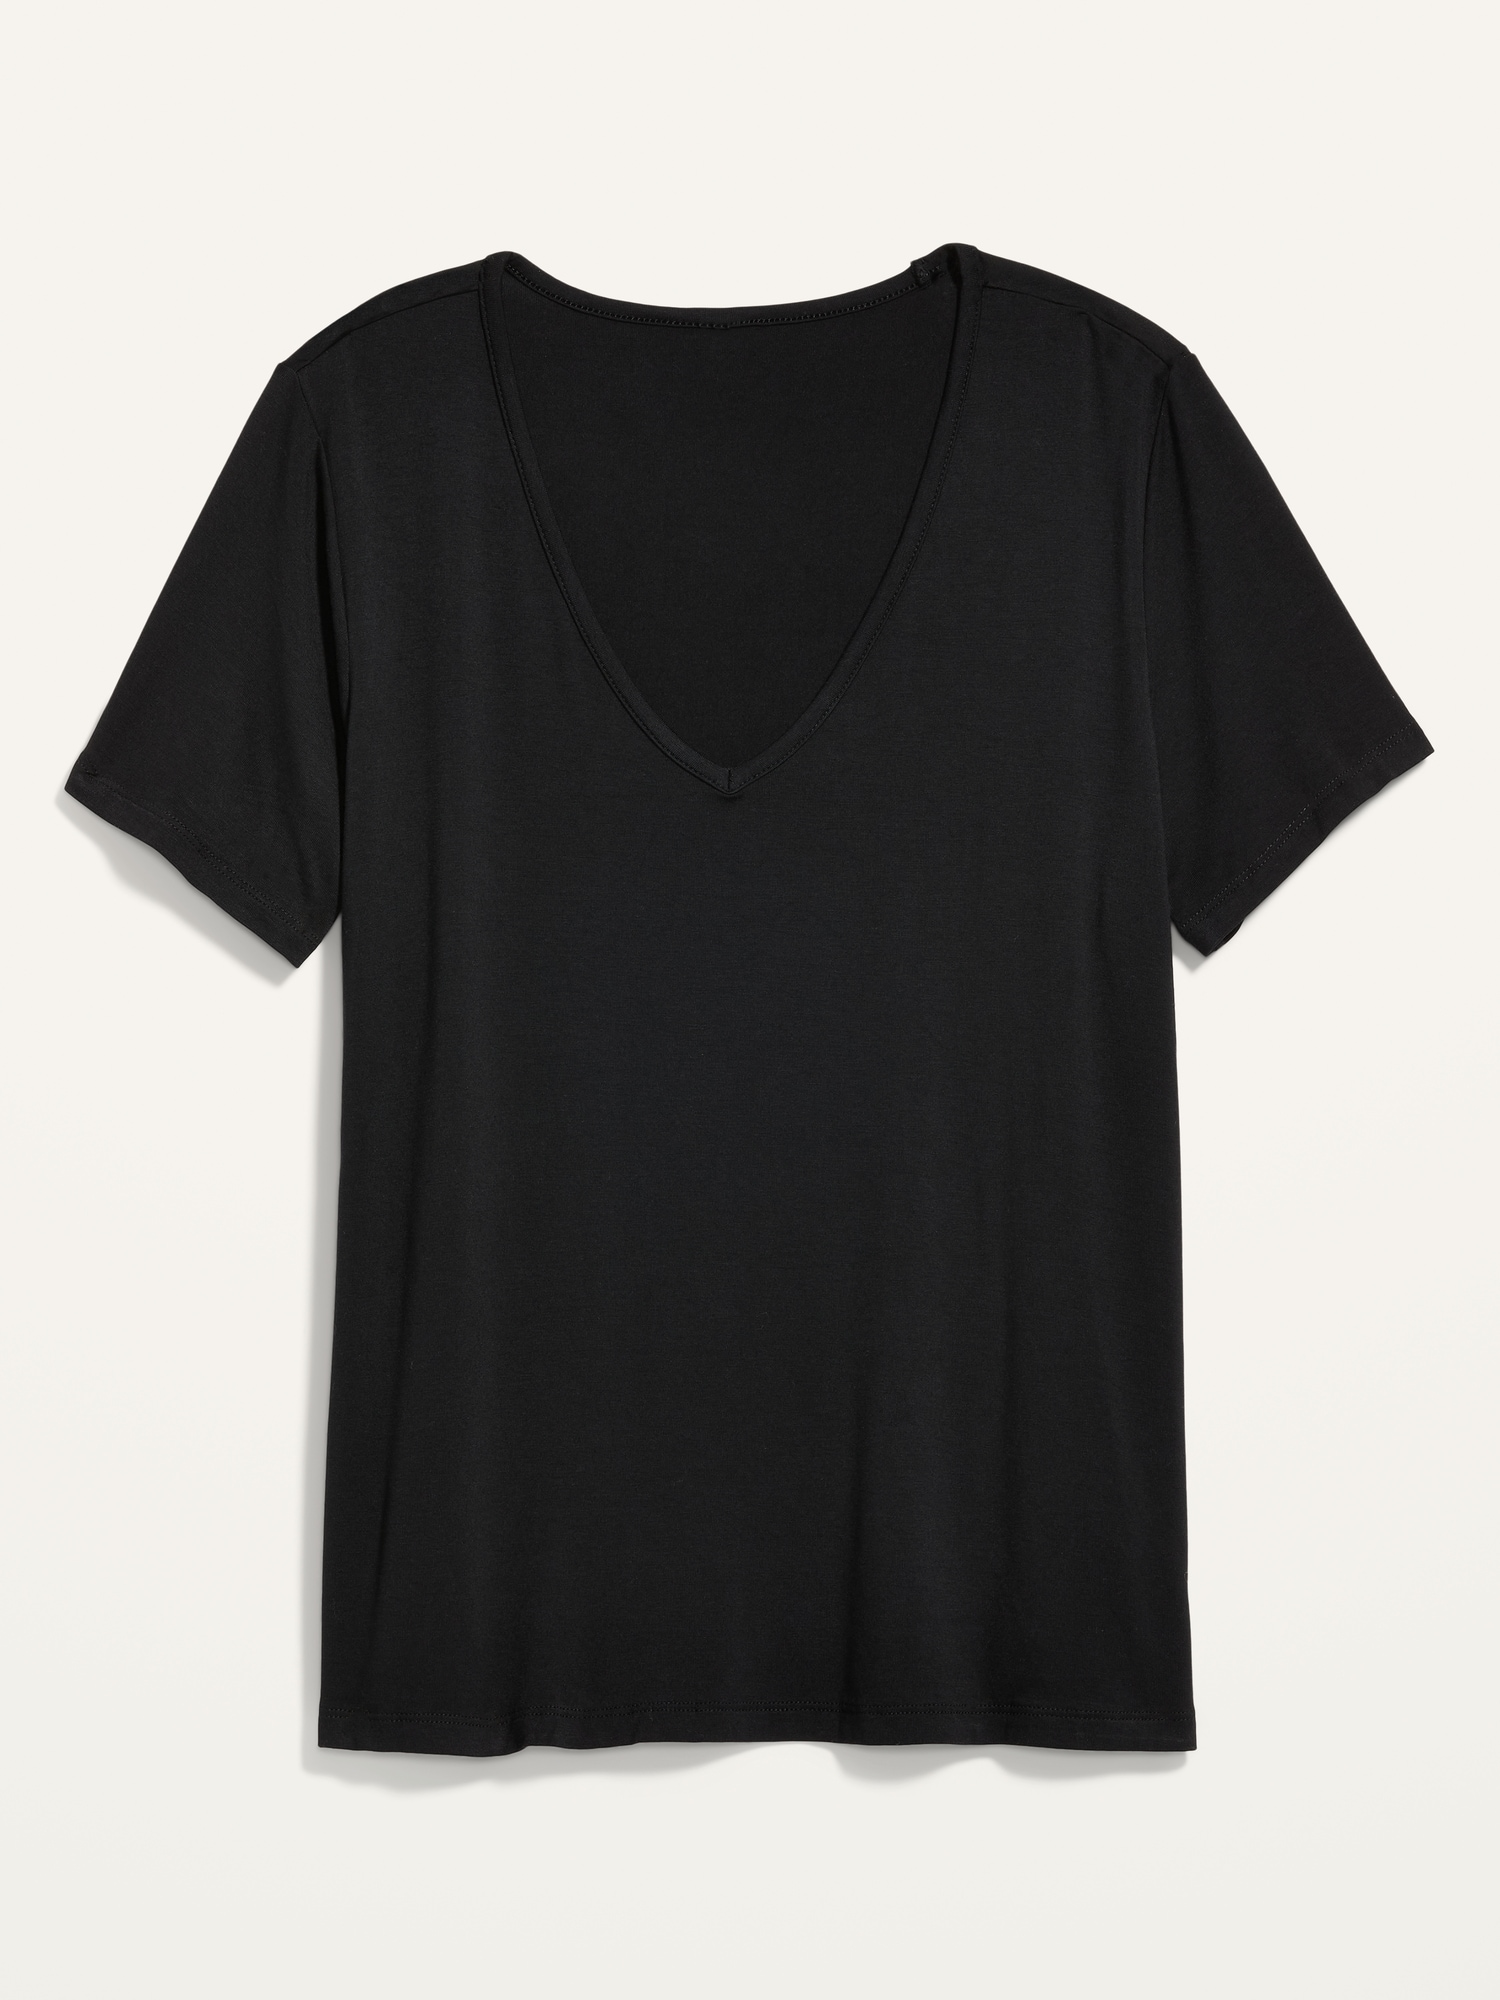 Luxe Slub-Knit T-Shirt | Old Navy